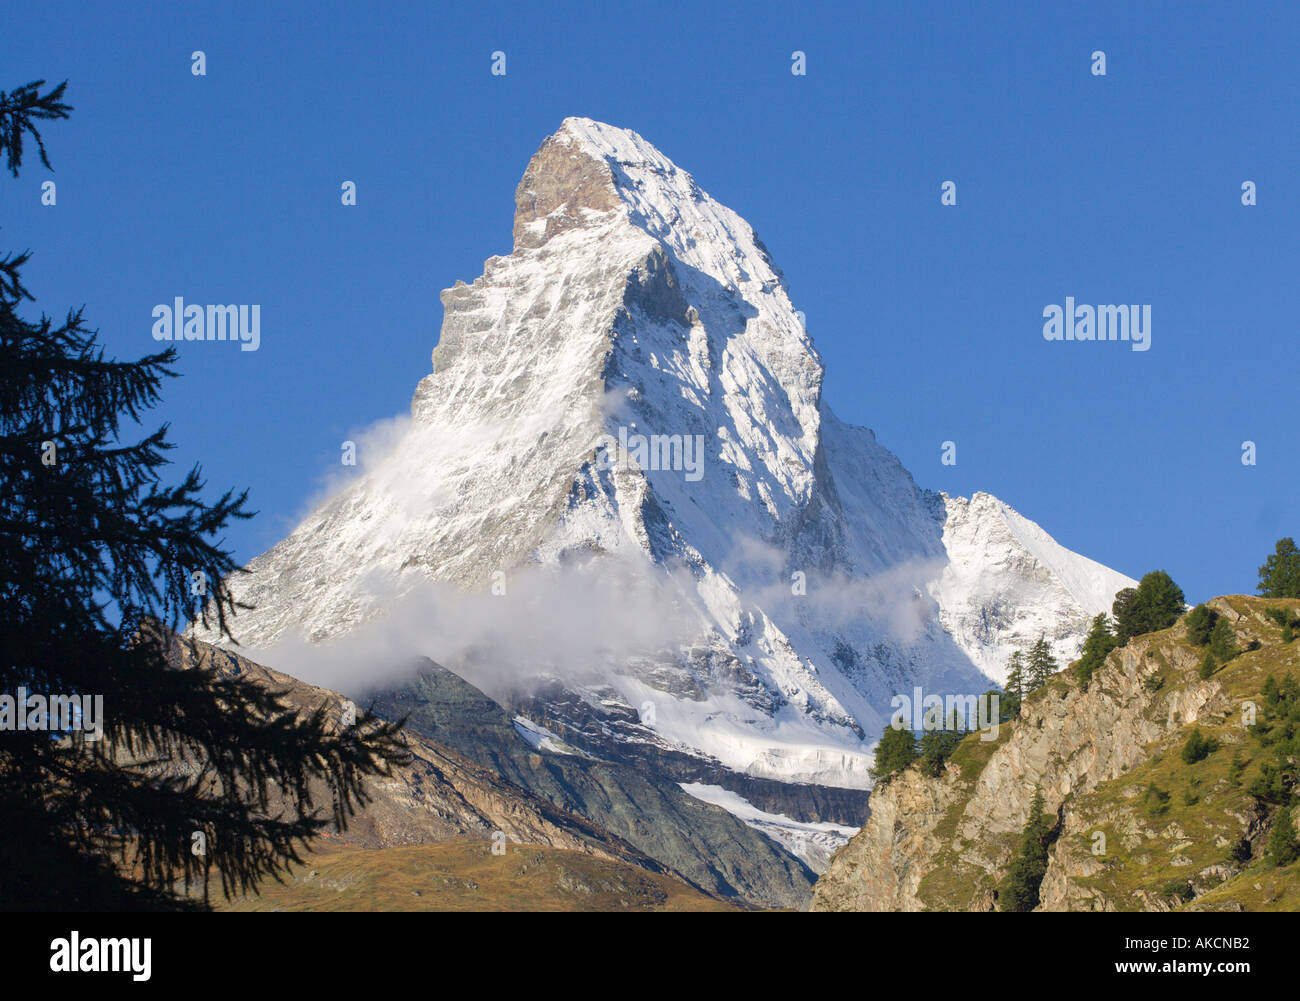 Peak of the Matterhorn mountain viewed from Zermatt with slope of hillside in front The Swiss Alps Valais Switzerland Stock Photo